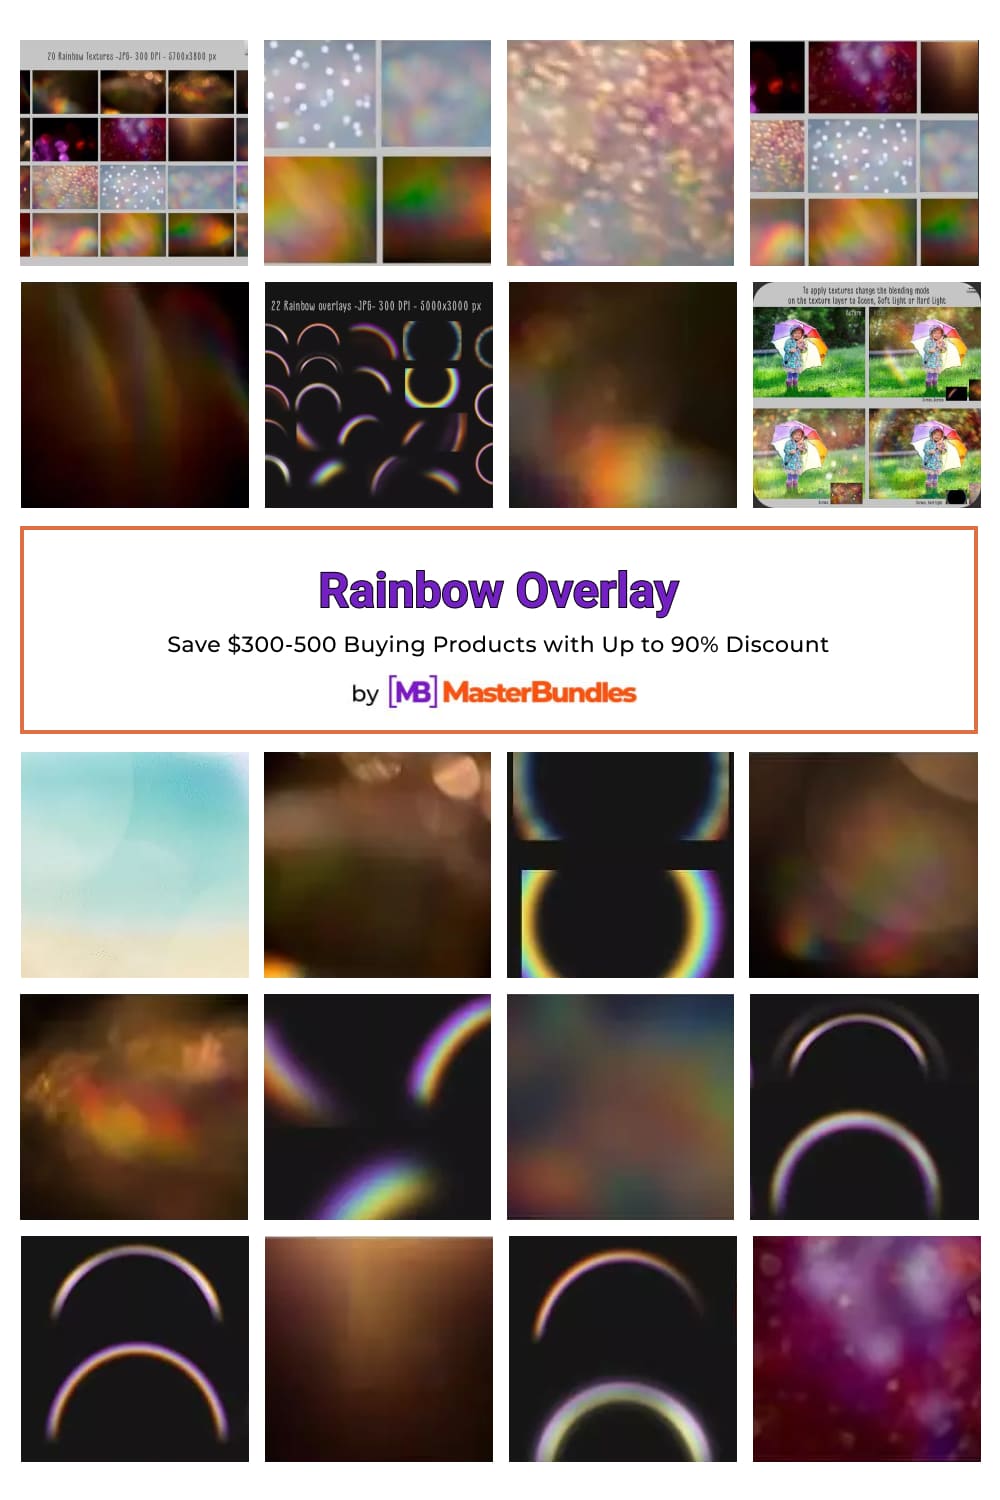 Rainbow Overlay Pinterest image.